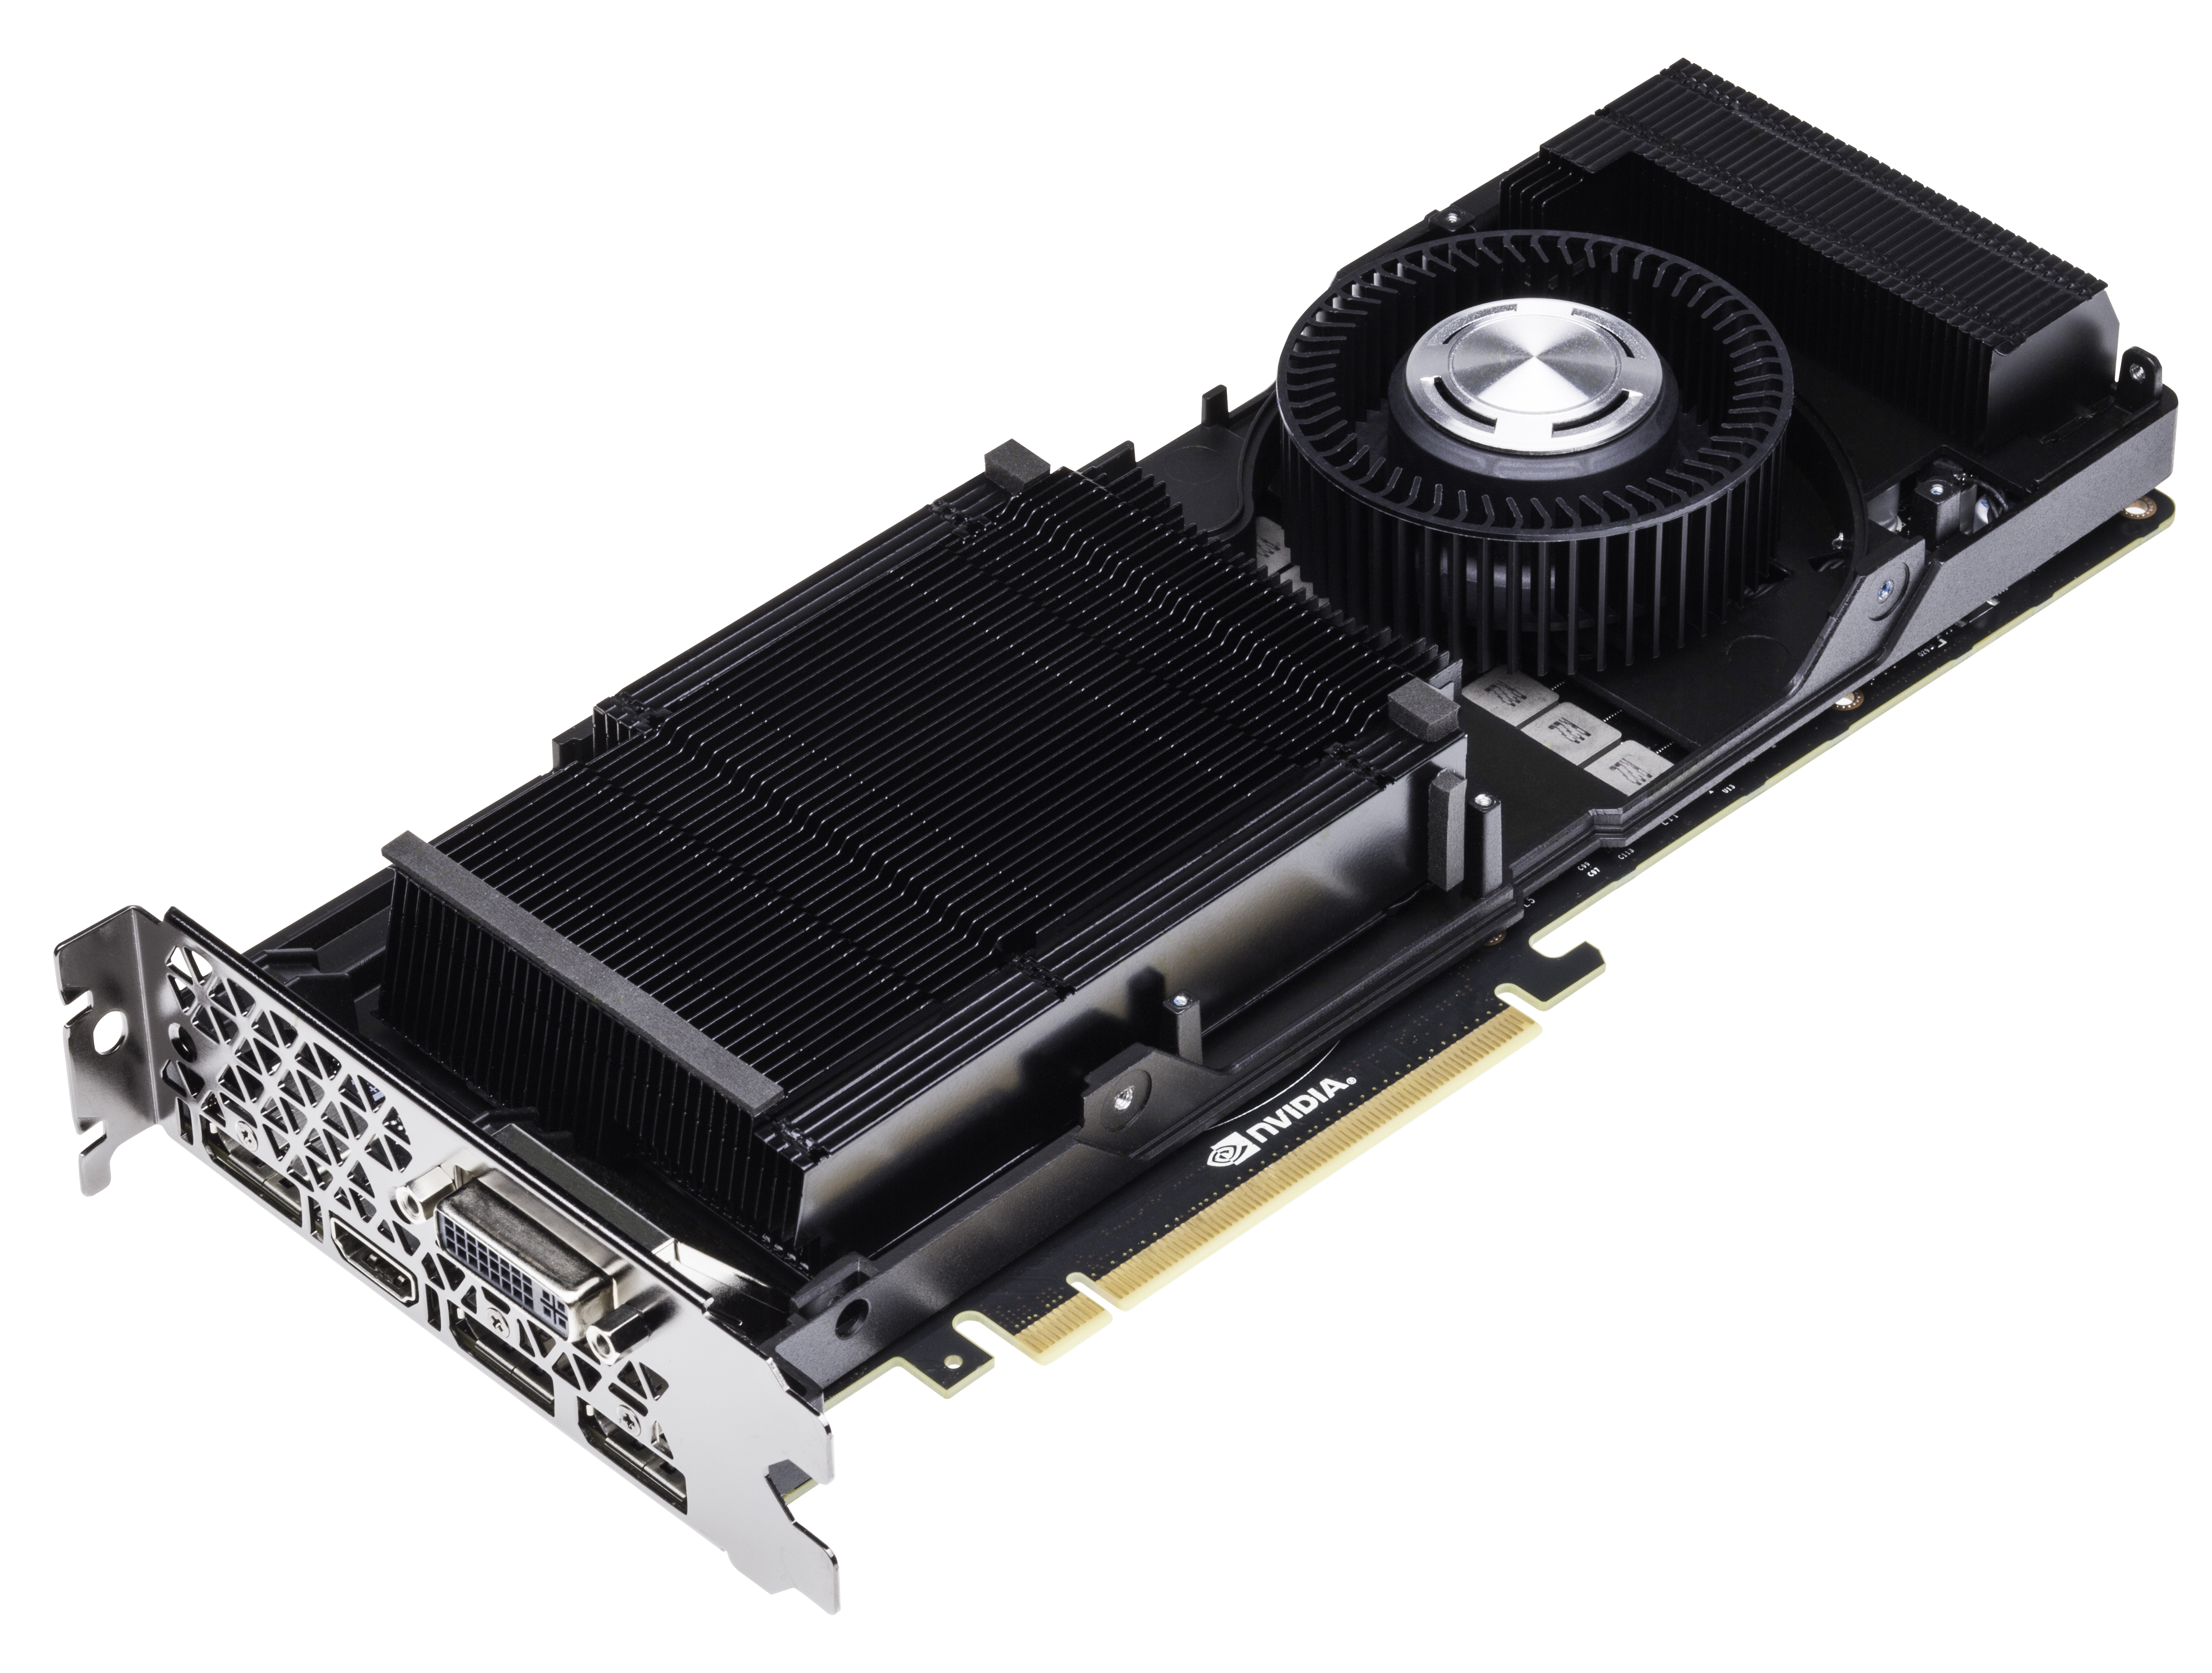 Meet The GeForce GTX 980 Ti - The NVIDIA GeForce GTX 980 Ti Review